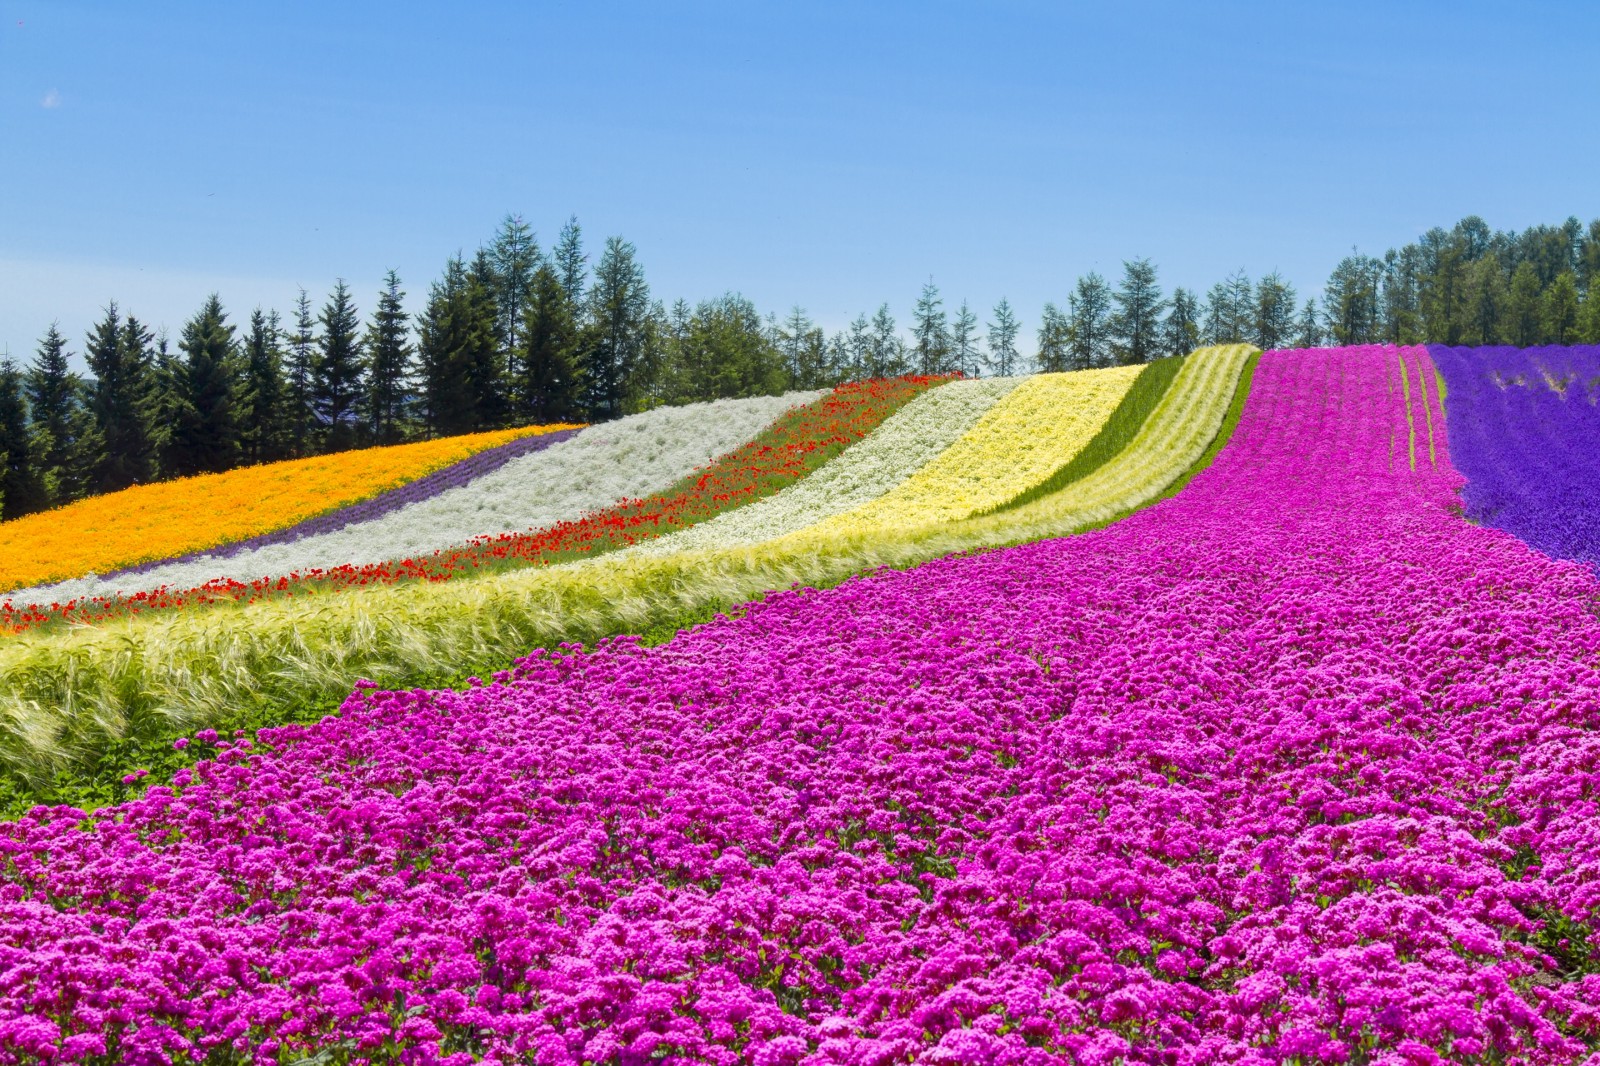 The colourful flower carpet at Tomita Farm, Furano